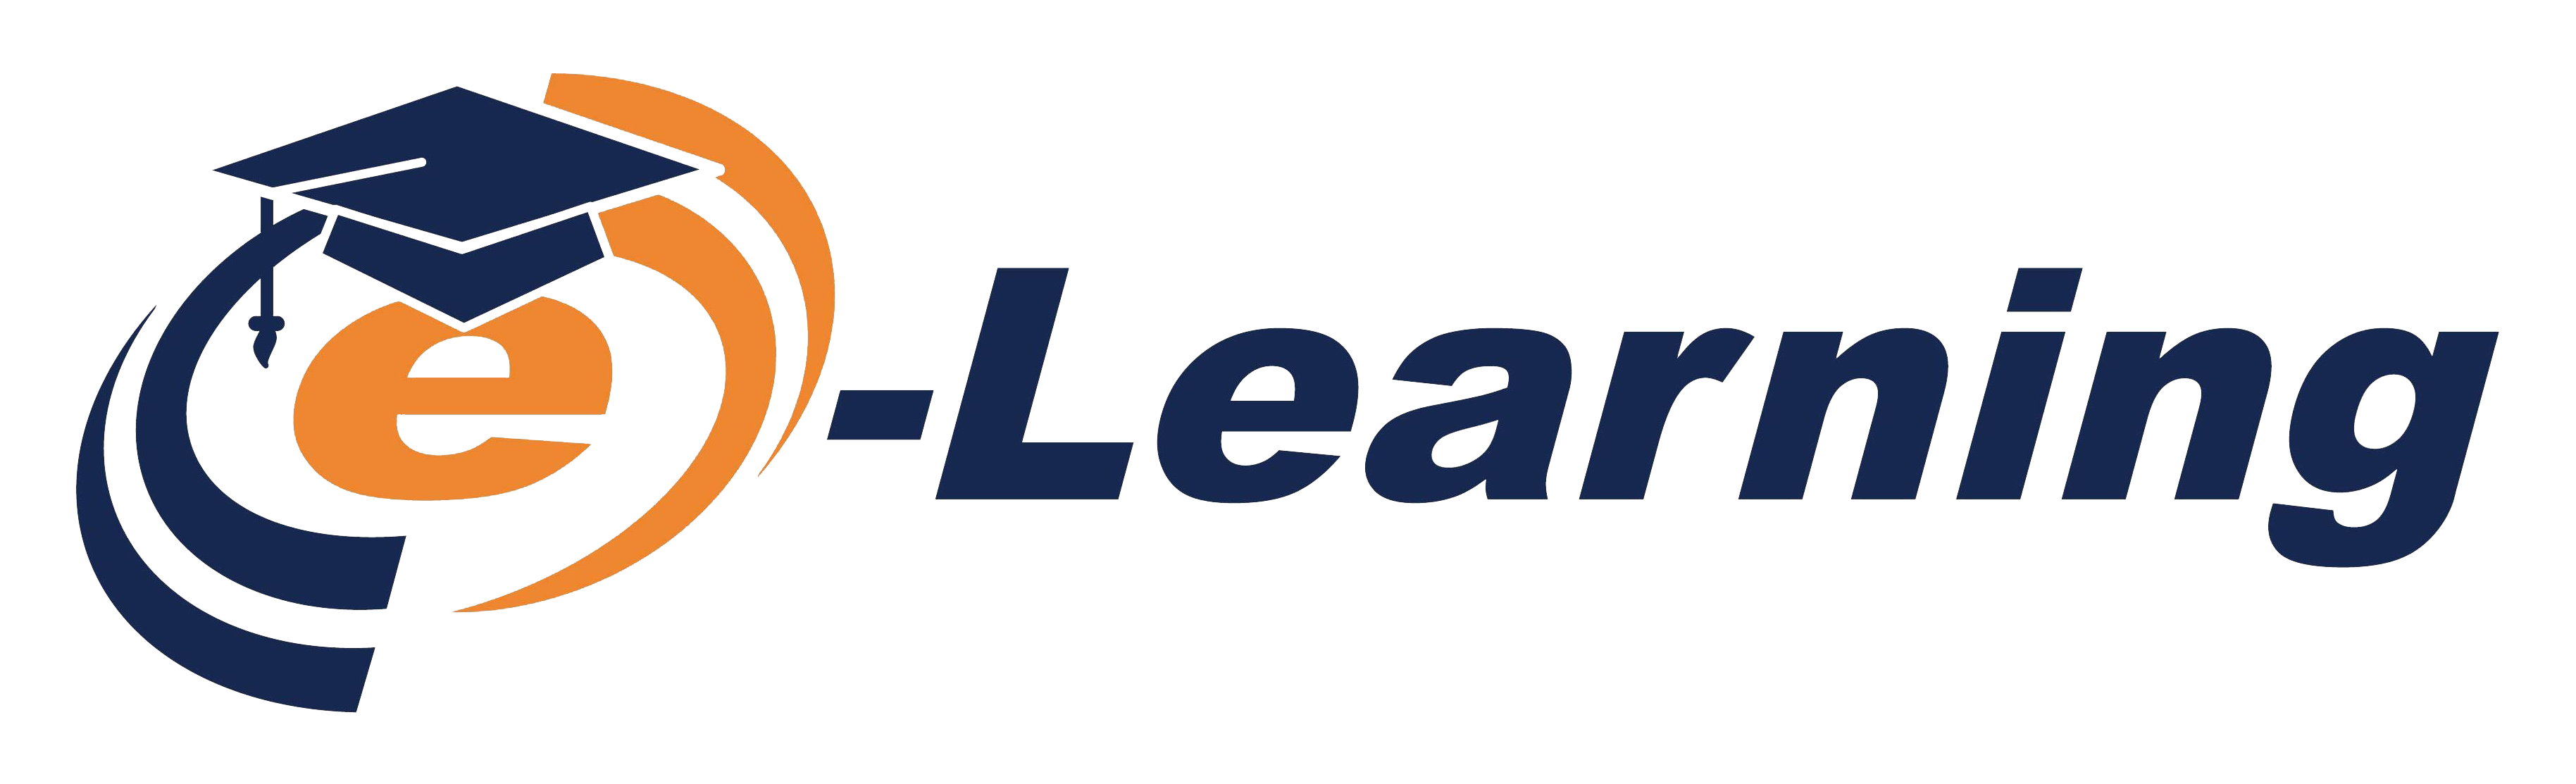 elearning-logo-e-learning